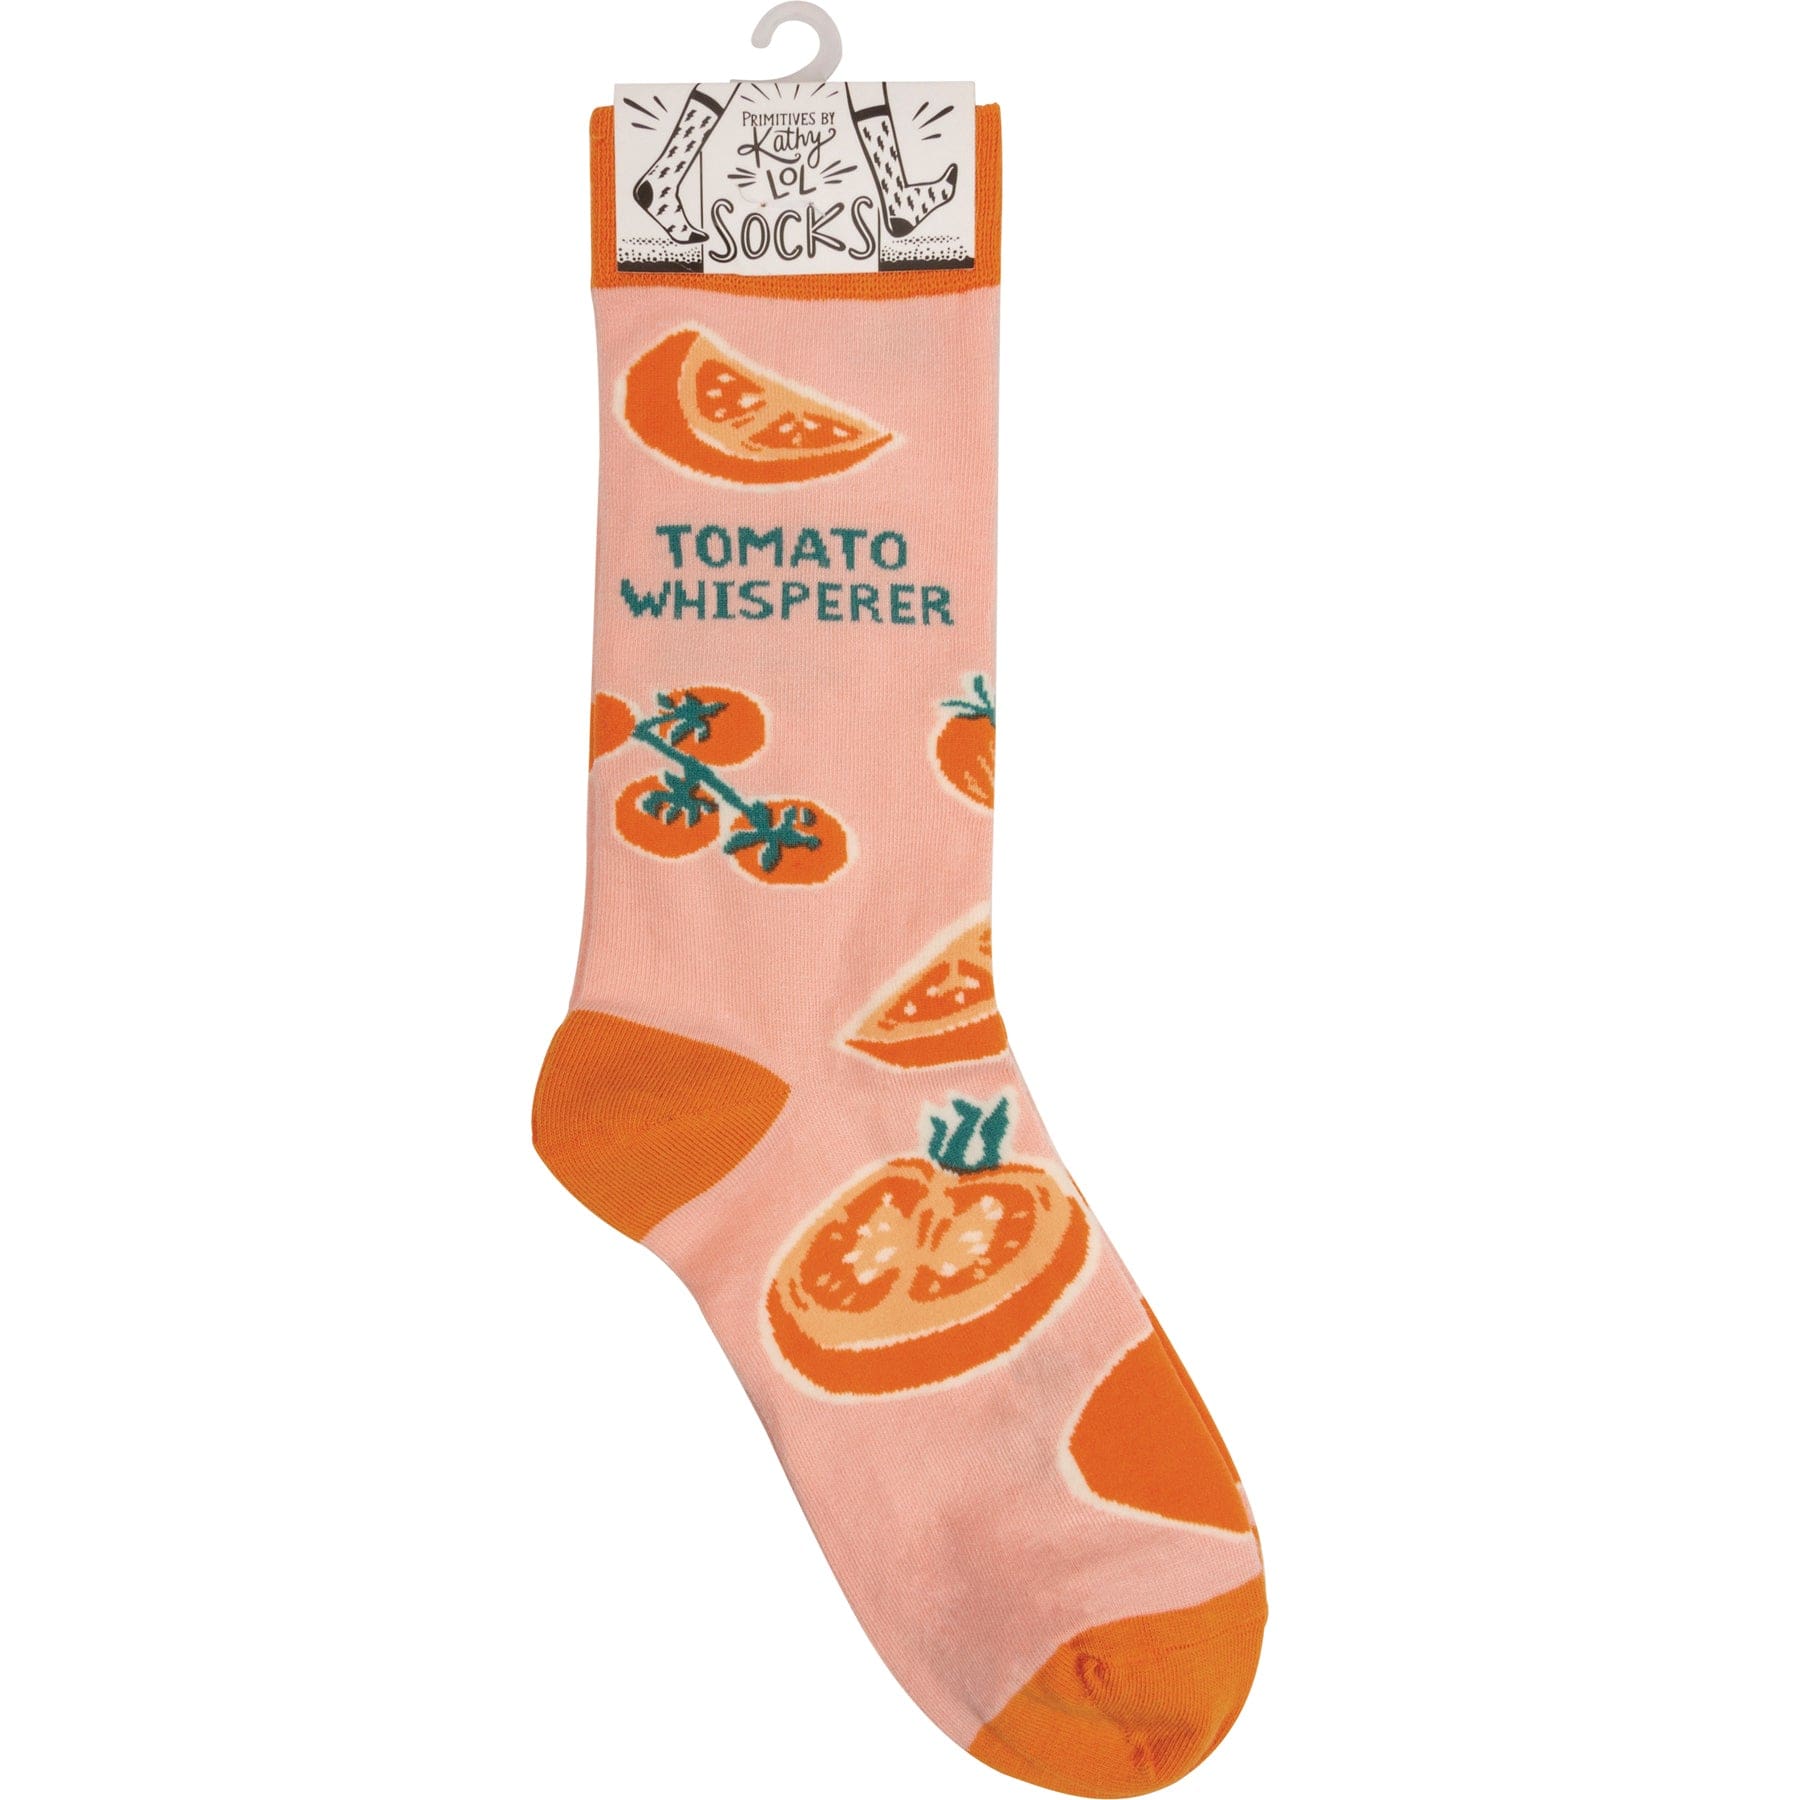 Socks One Size Fits Most Socks - Tomato Whisperer PBK-109116